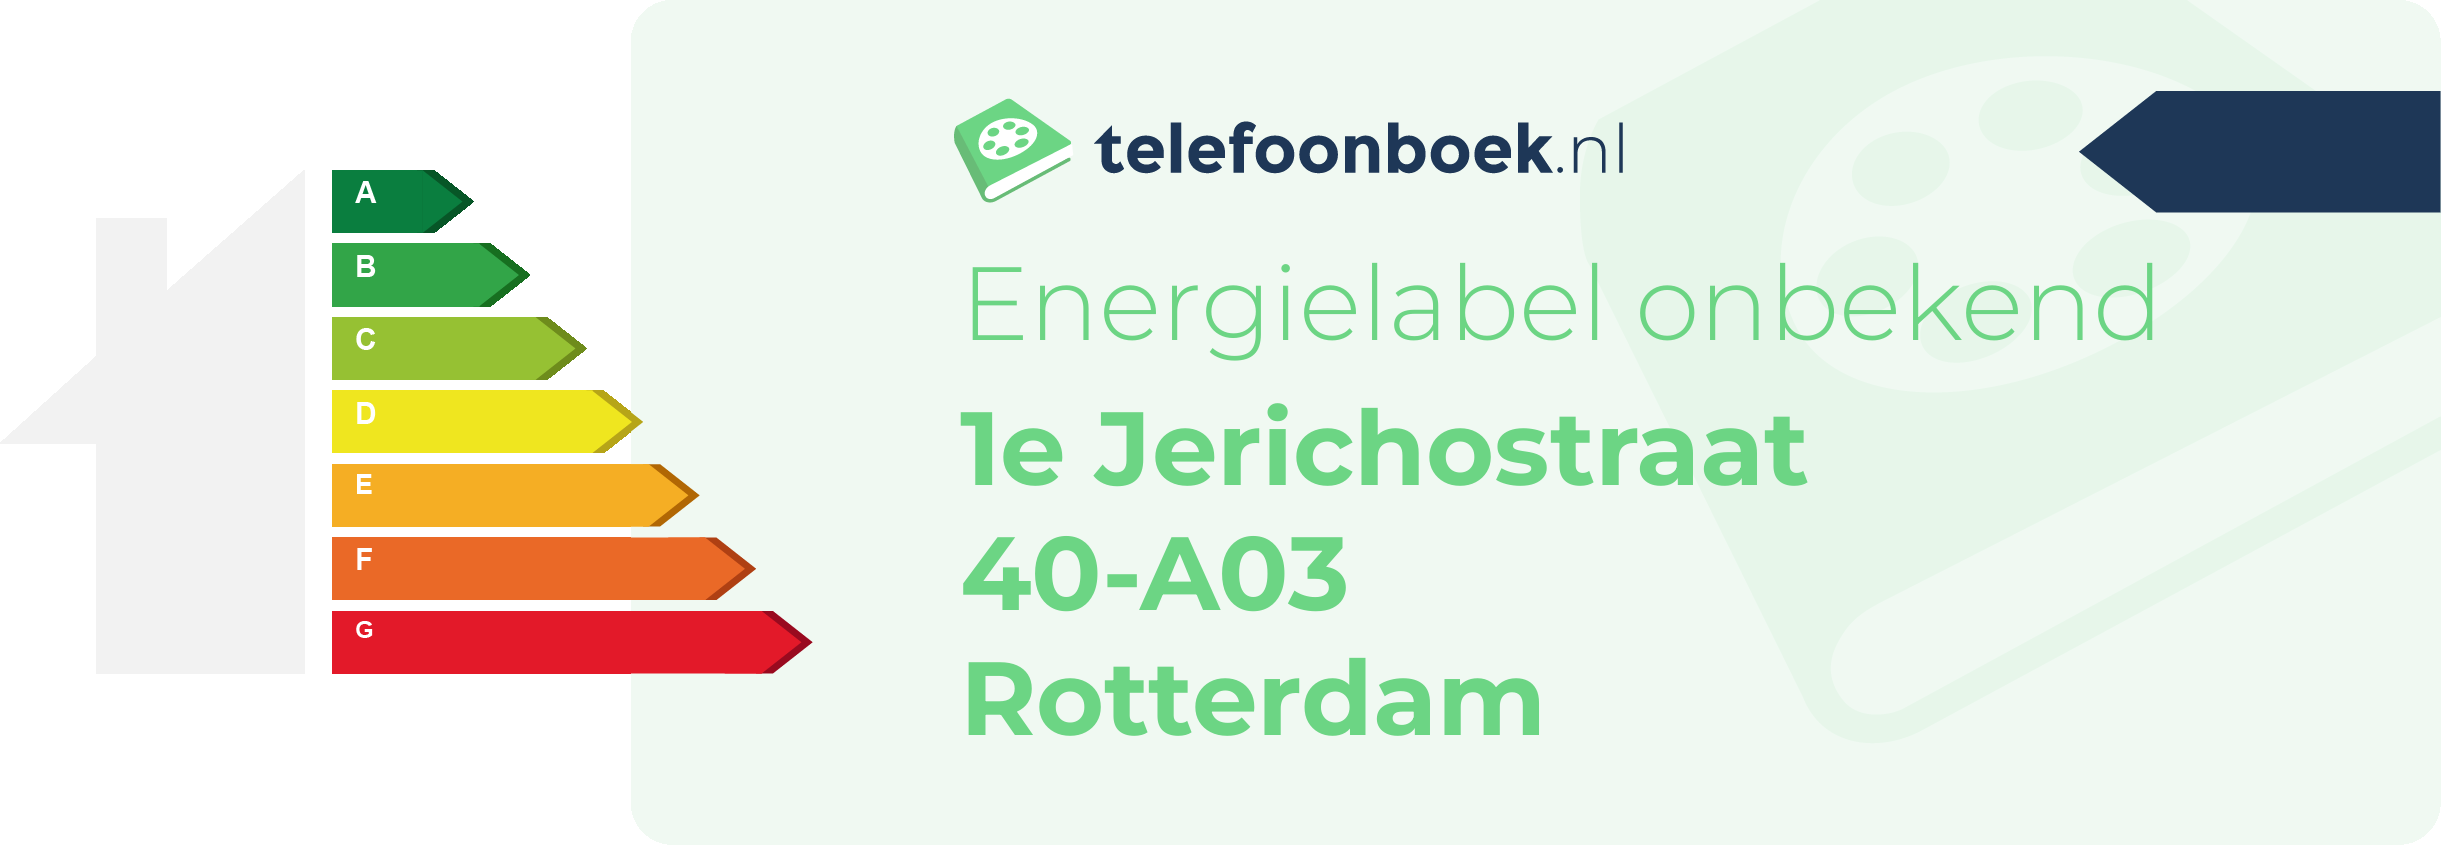 Energielabel 1e Jerichostraat 40-A03 Rotterdam